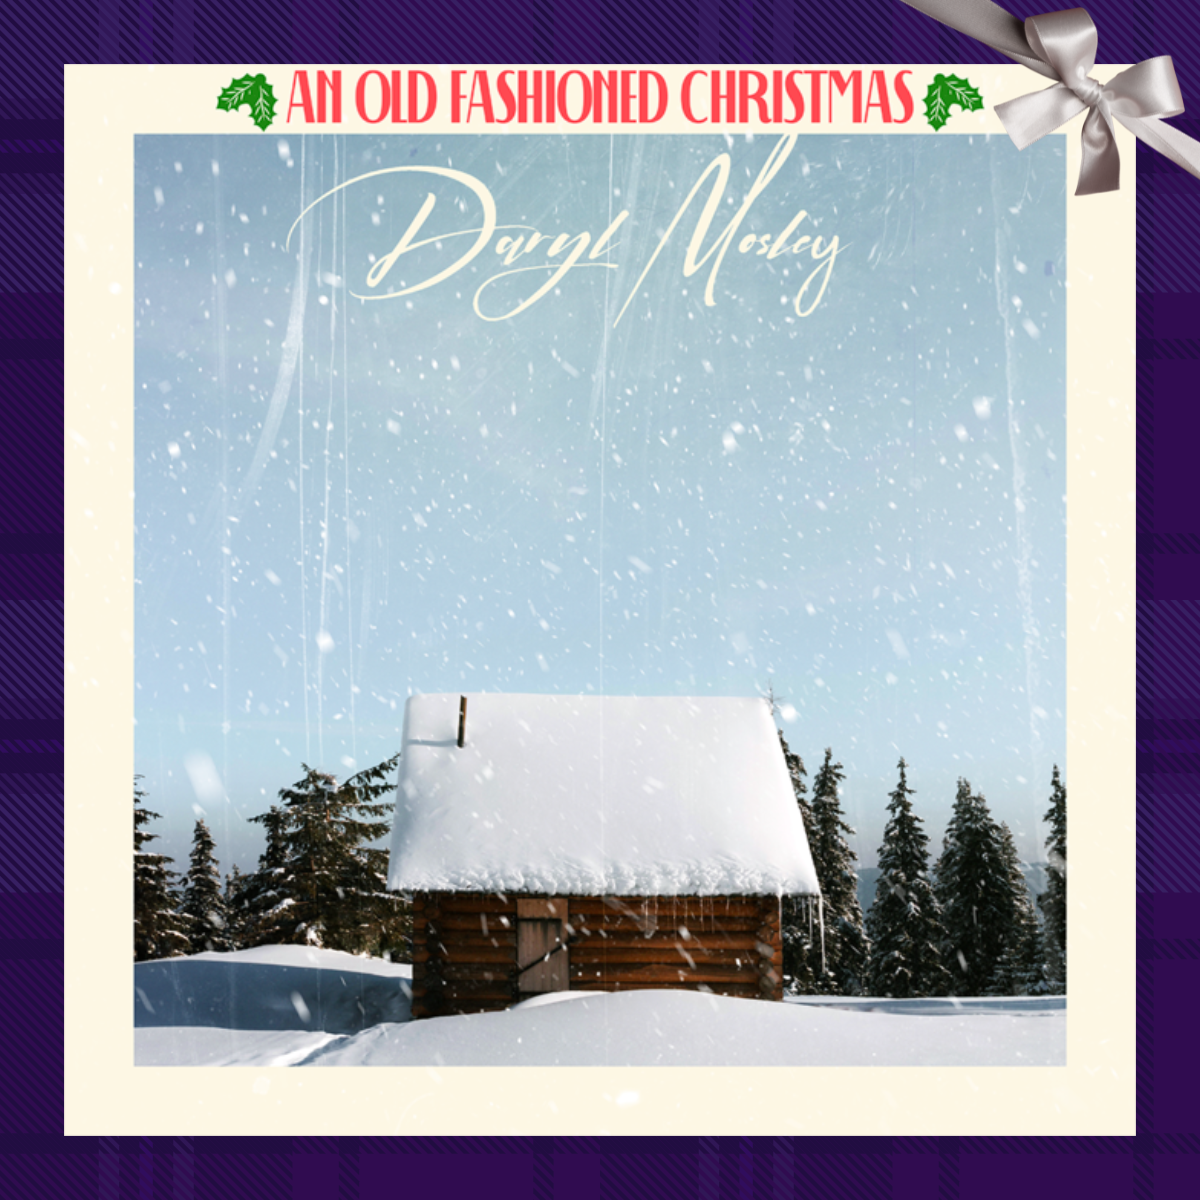 BGS WRAPS: Dale Ann Bradley & Tina Adair, “An Old Christmas Card”